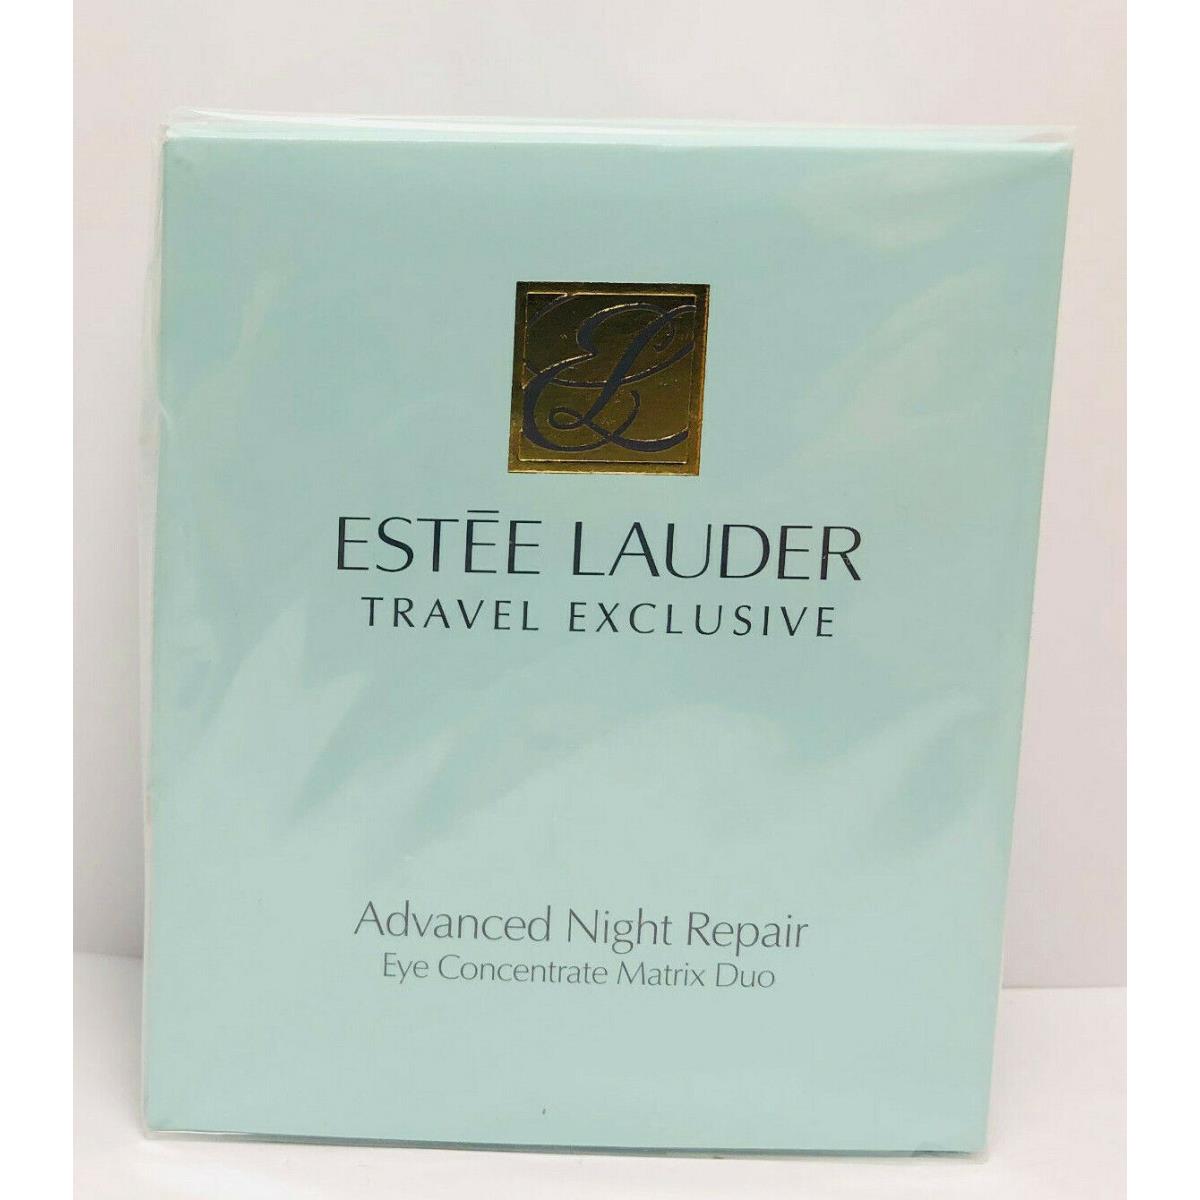 Estee Lauder Travel Exclusive Advanced Night Repair Eye Concentrate Matrix Duo